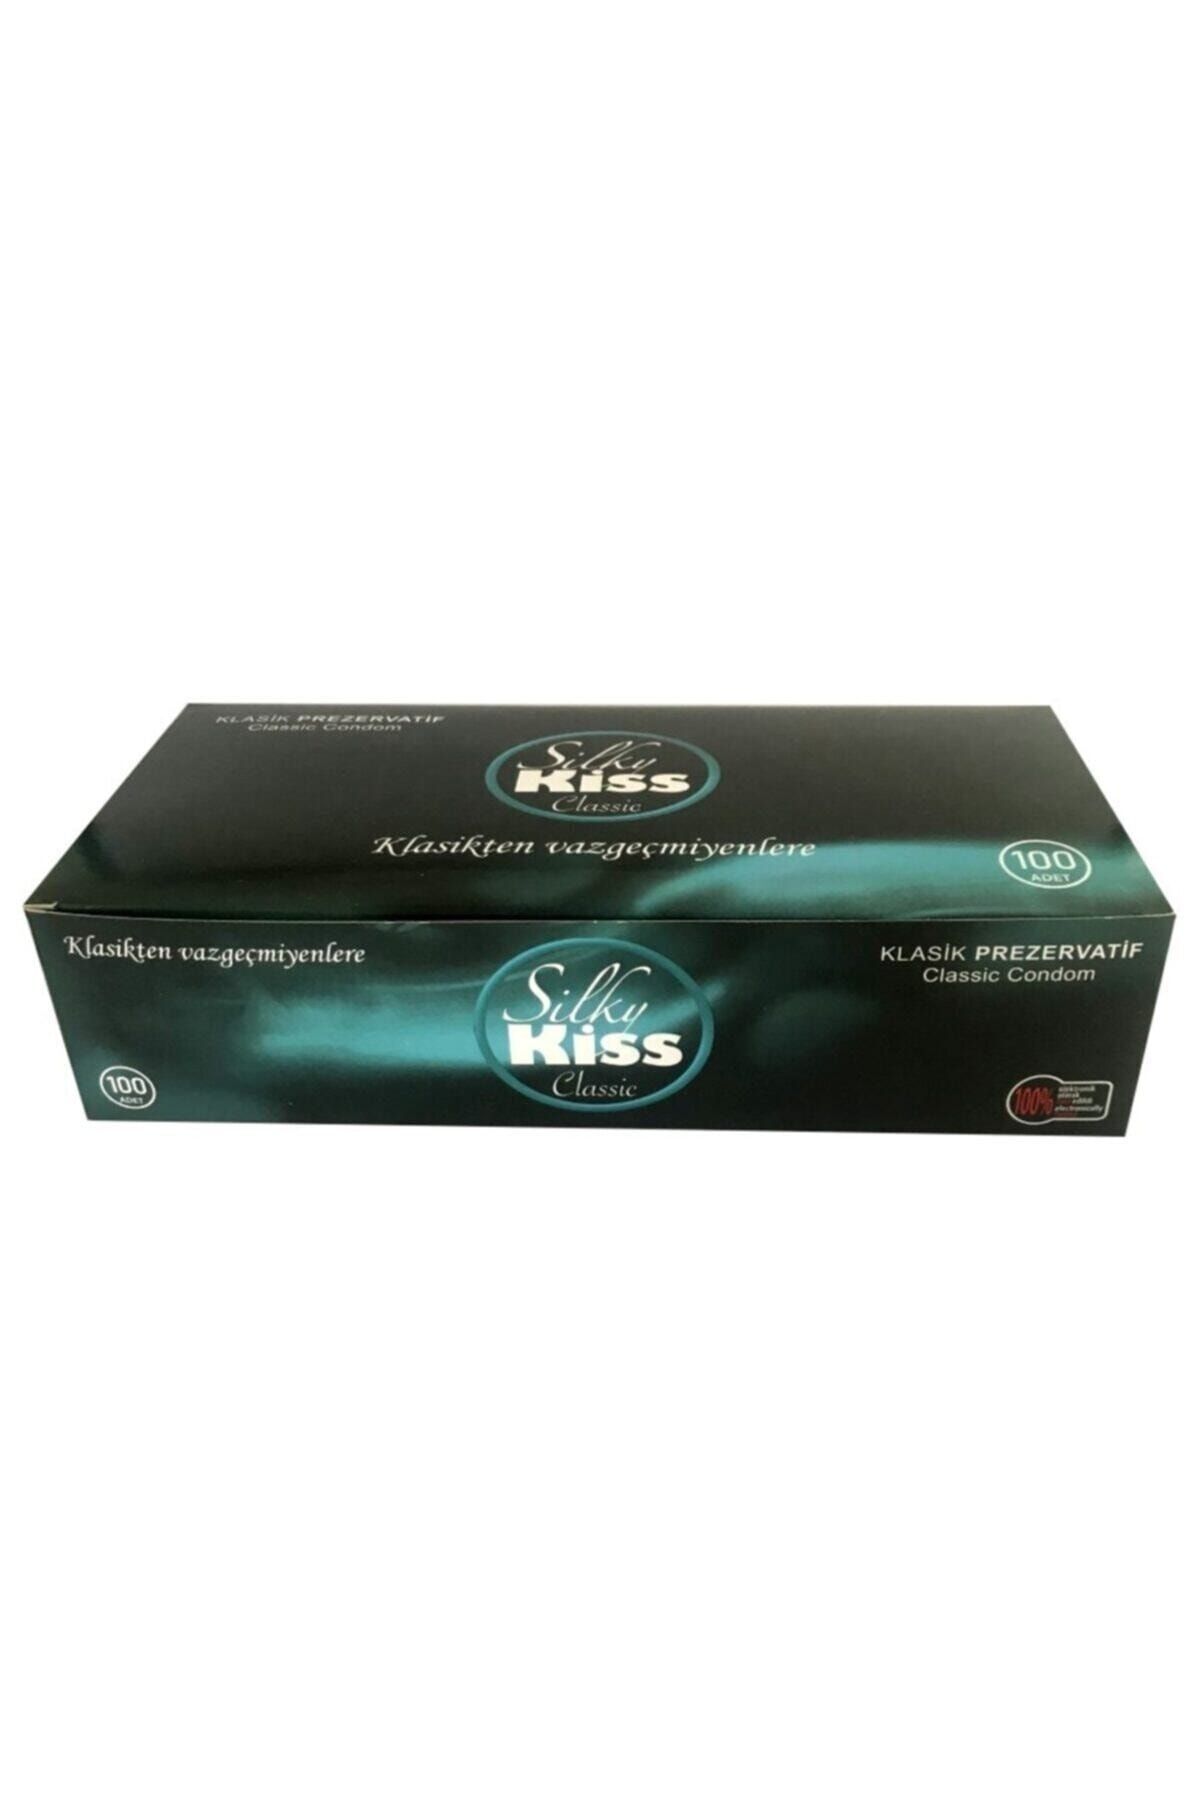 Silky Kiss Eko Paket Klasik Prezervatif